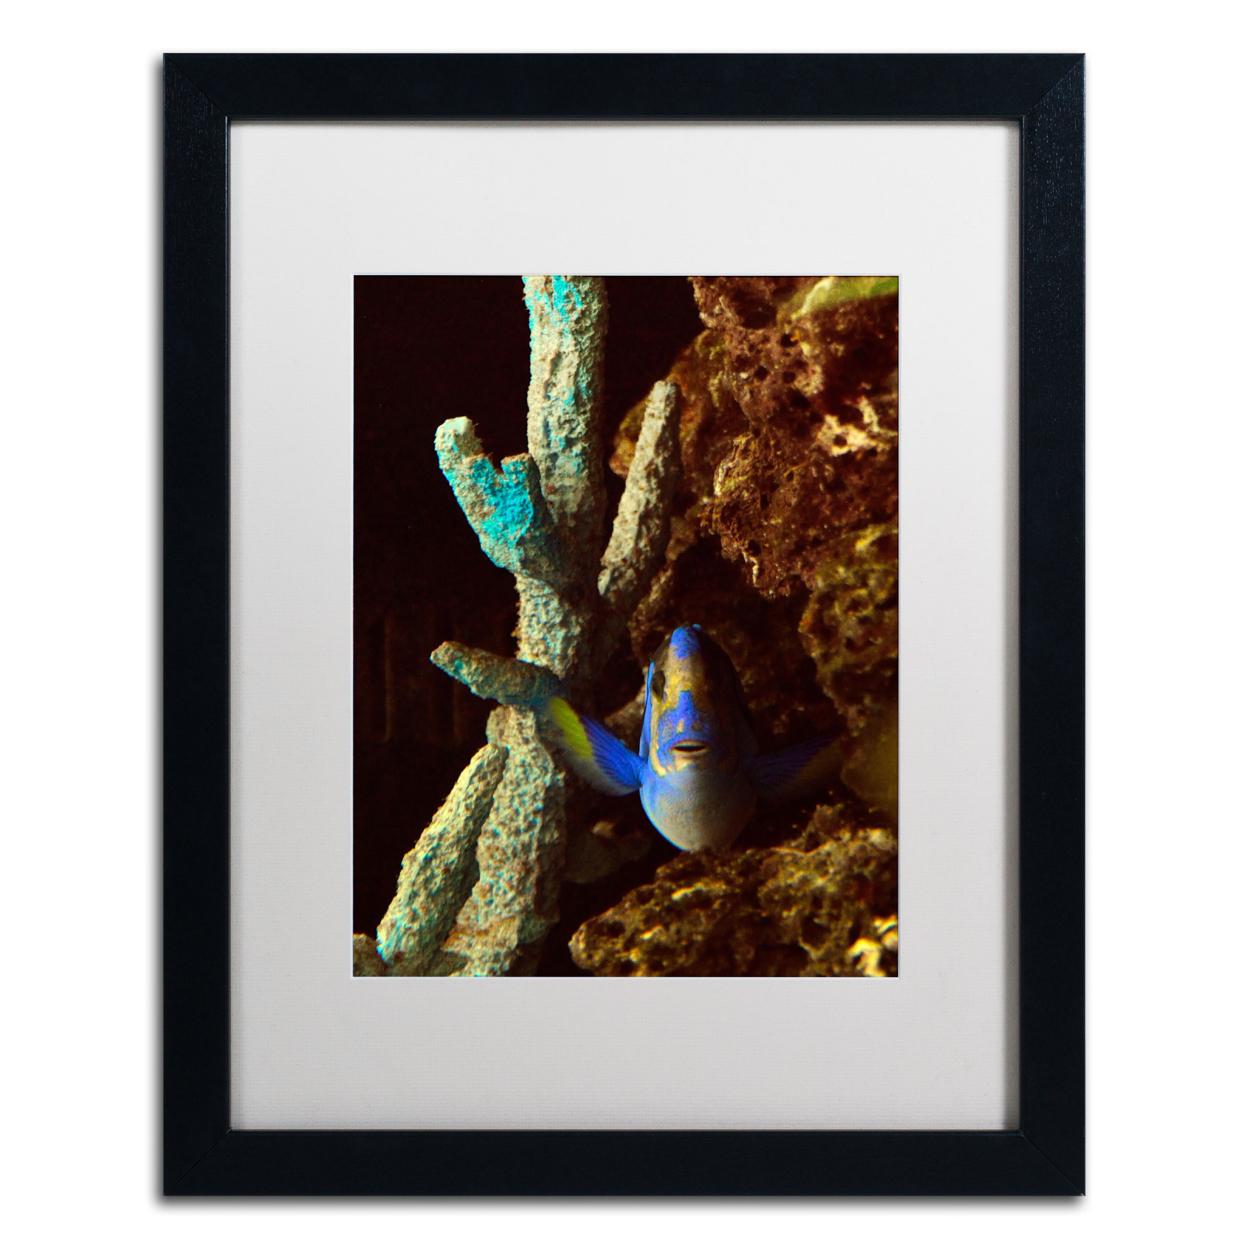 Kurt Shaffer 'Fish In The Rocks' Black Wooden Framed Art 18 X 22 Inches